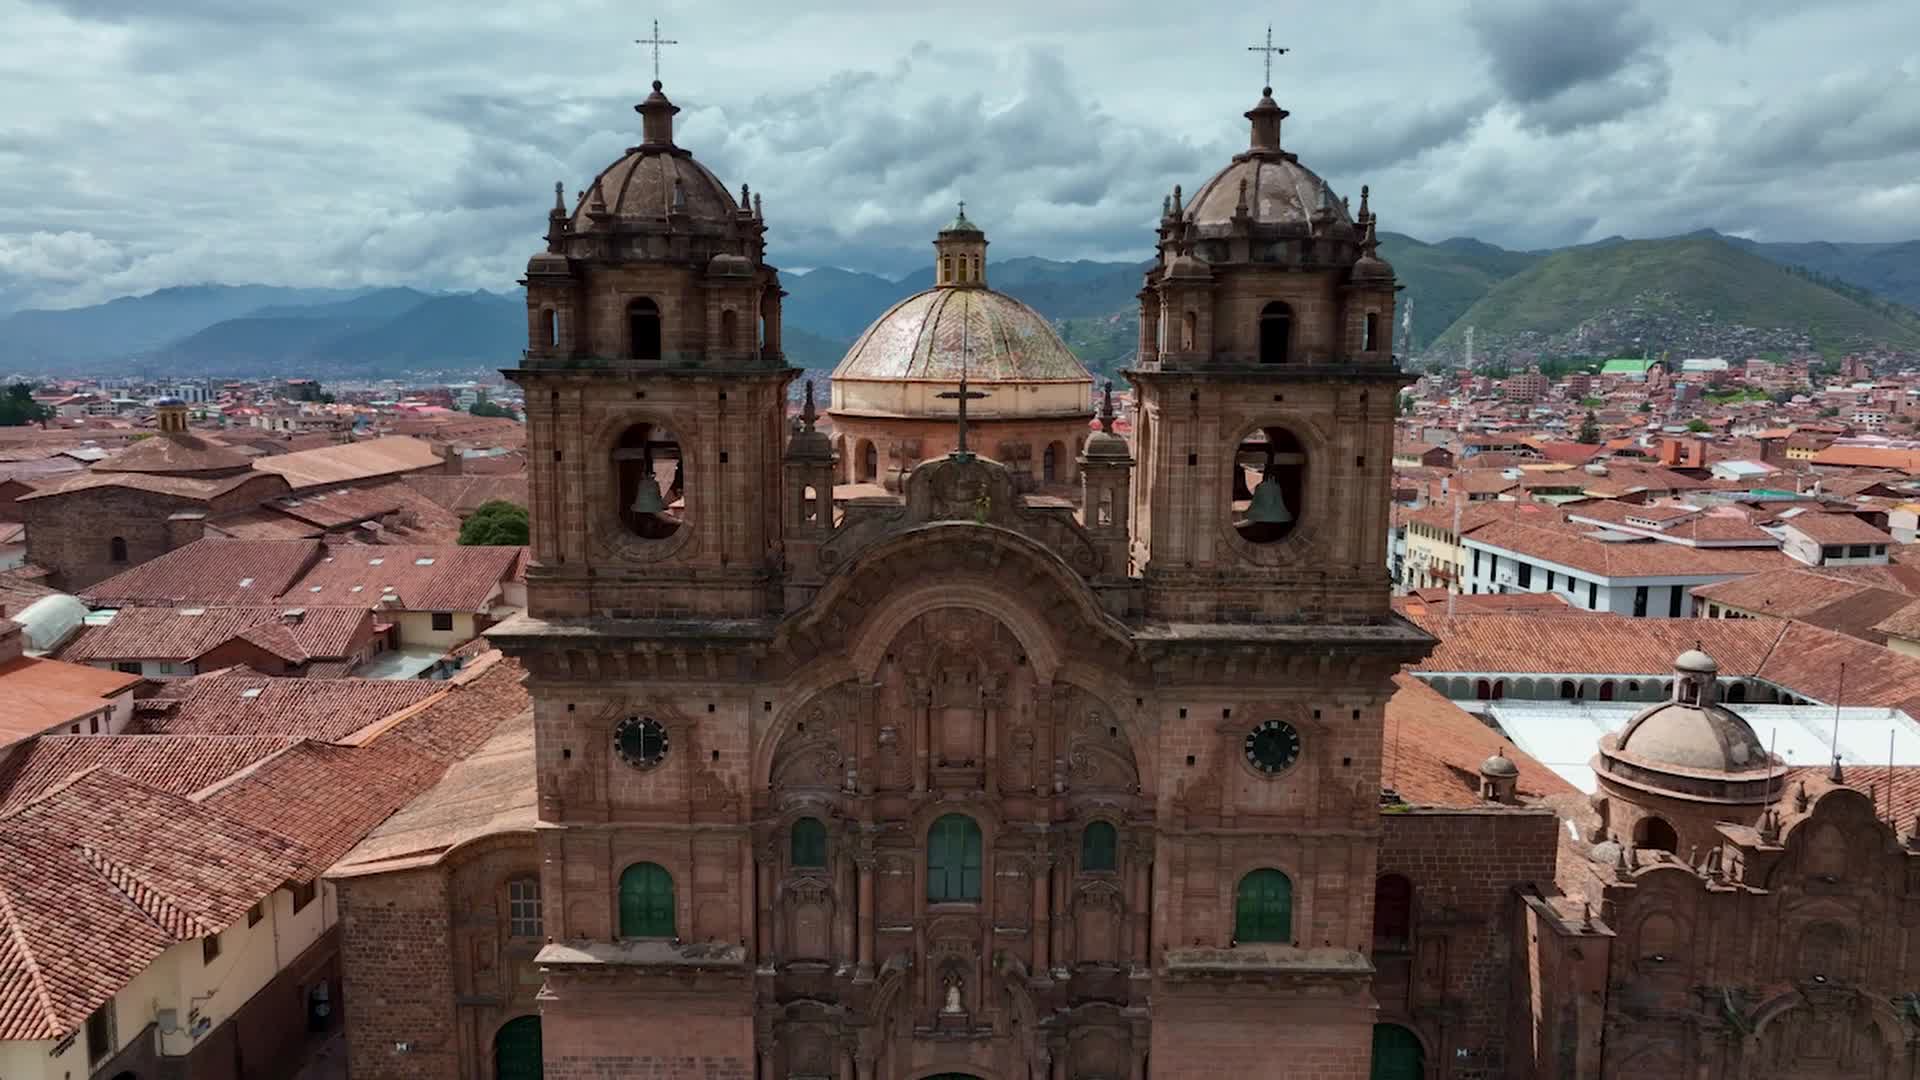 Belmond Hotel Monasterio, Cusco, Peru - Hotel Review